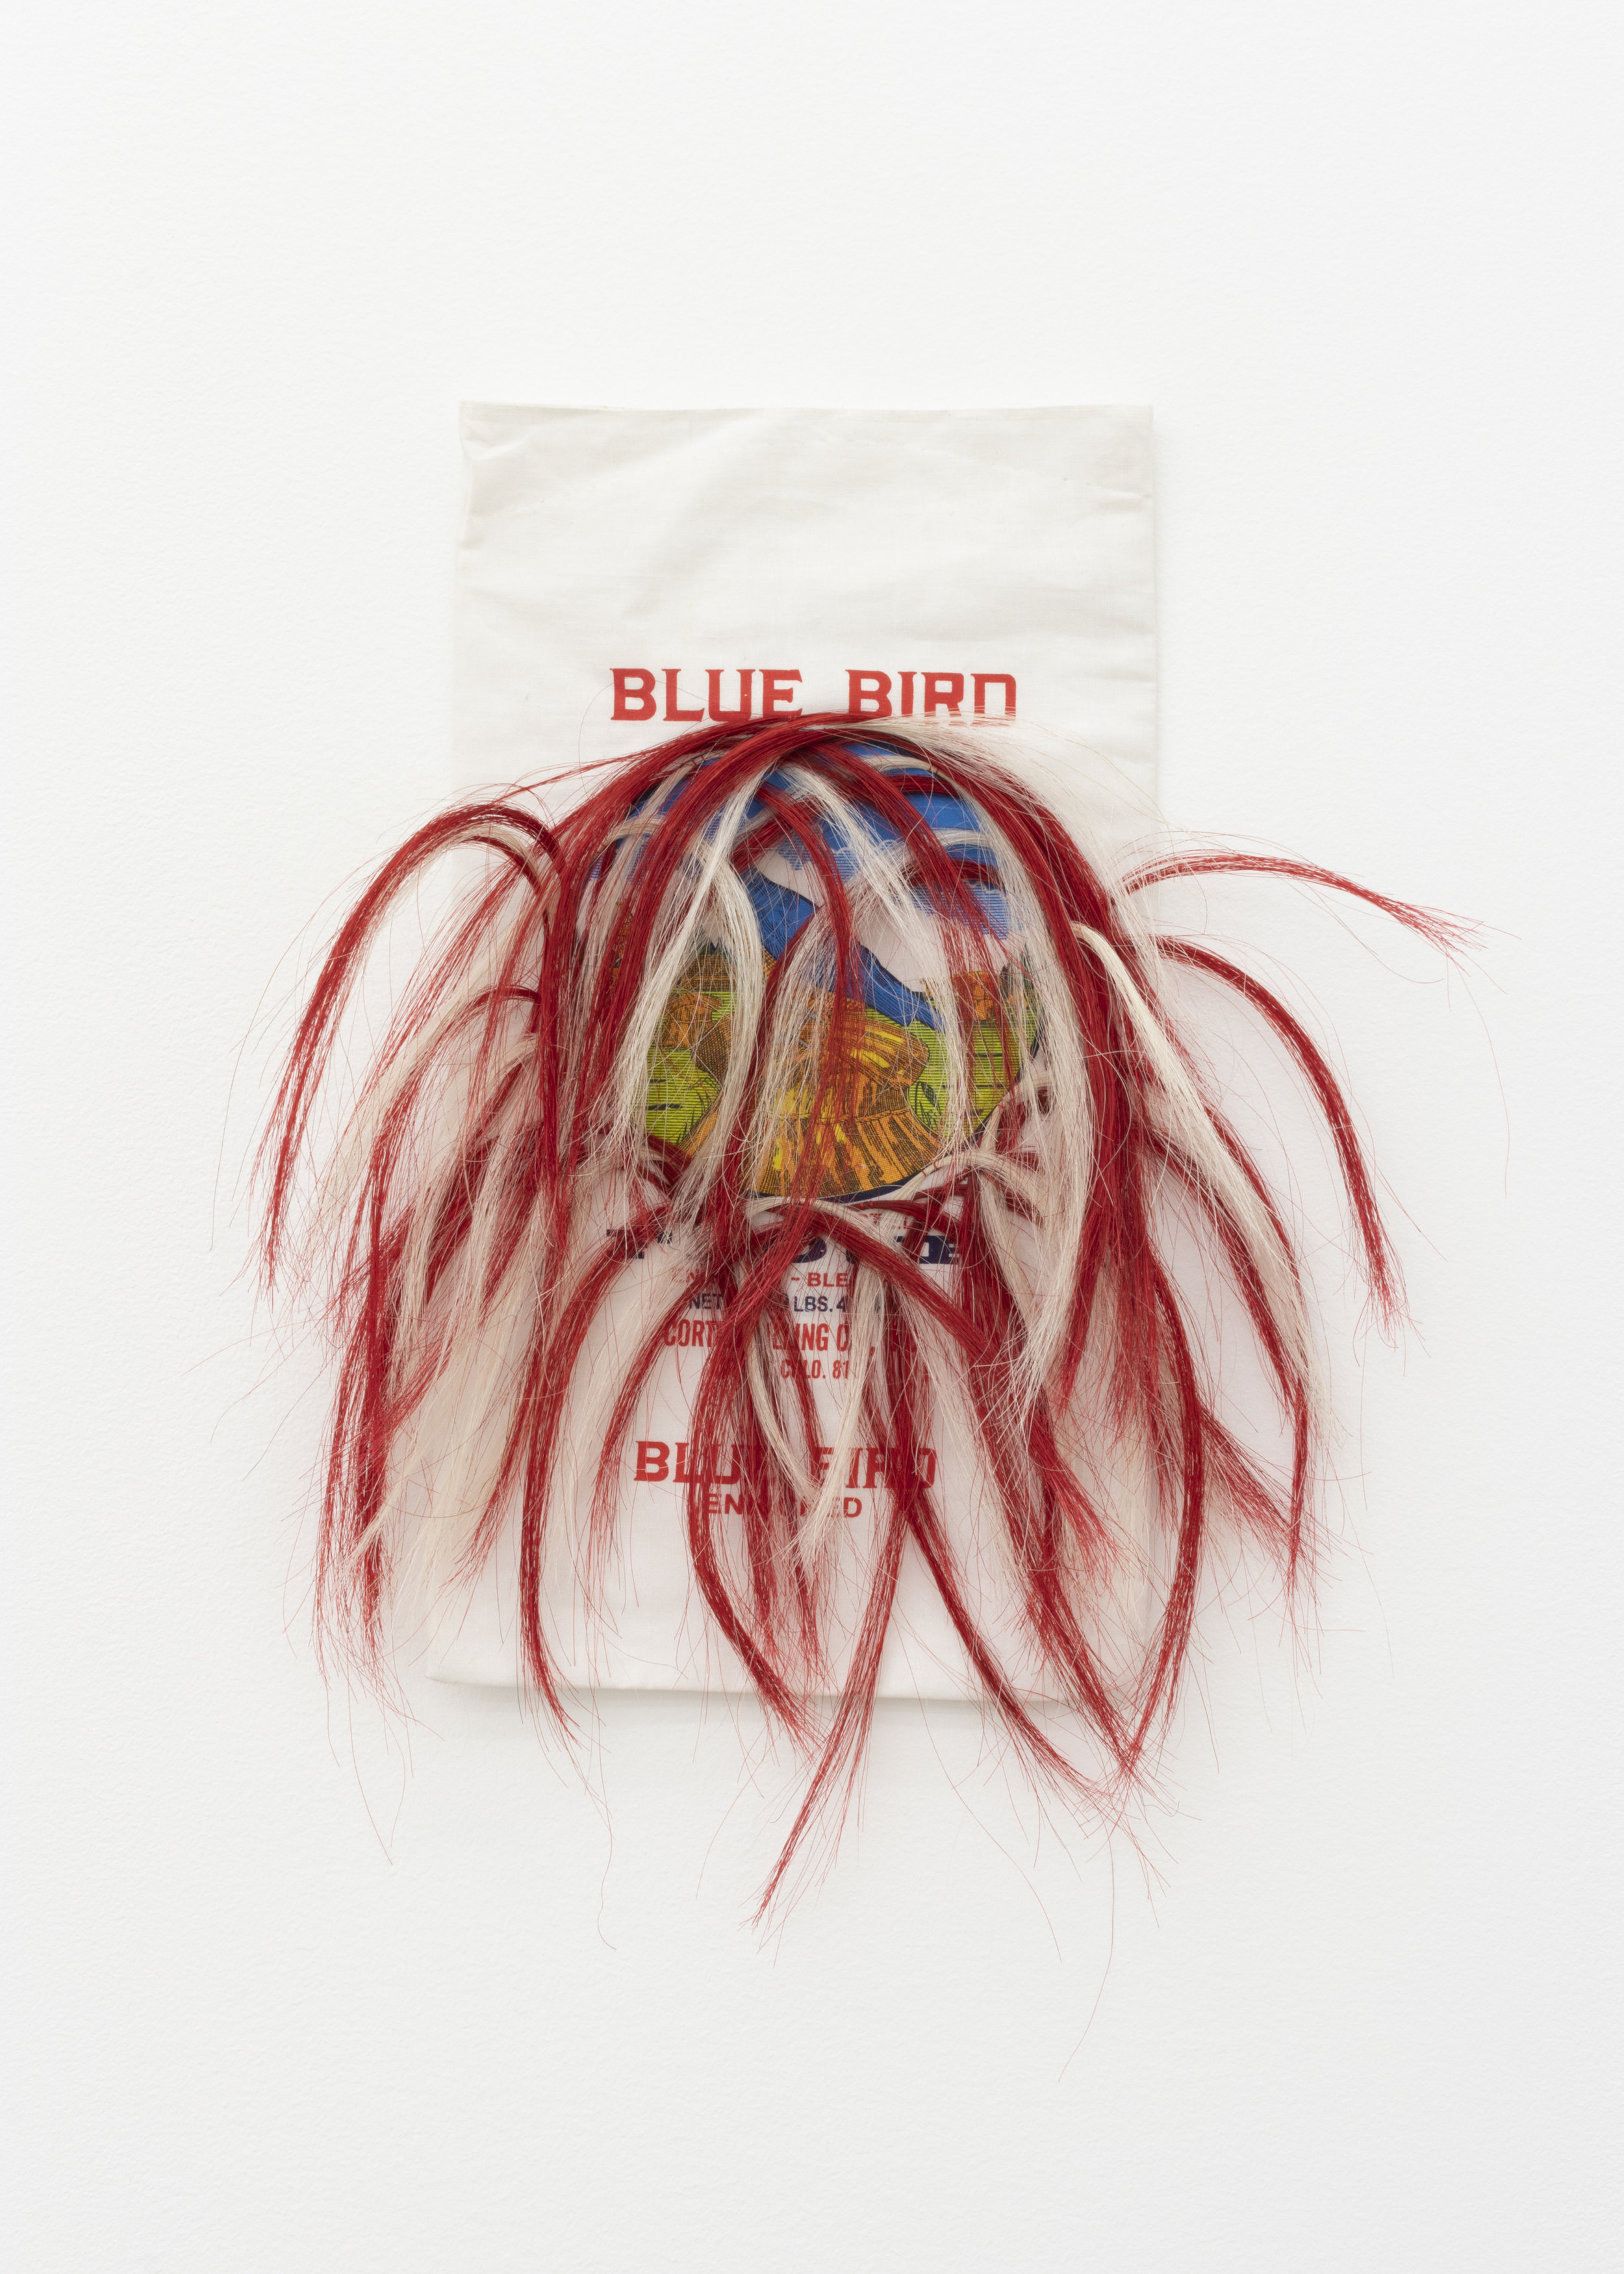   Treaty No. 16 , 2019, Blue Bird Flour Bag, horse hair, thread, 20 x 16 in. 